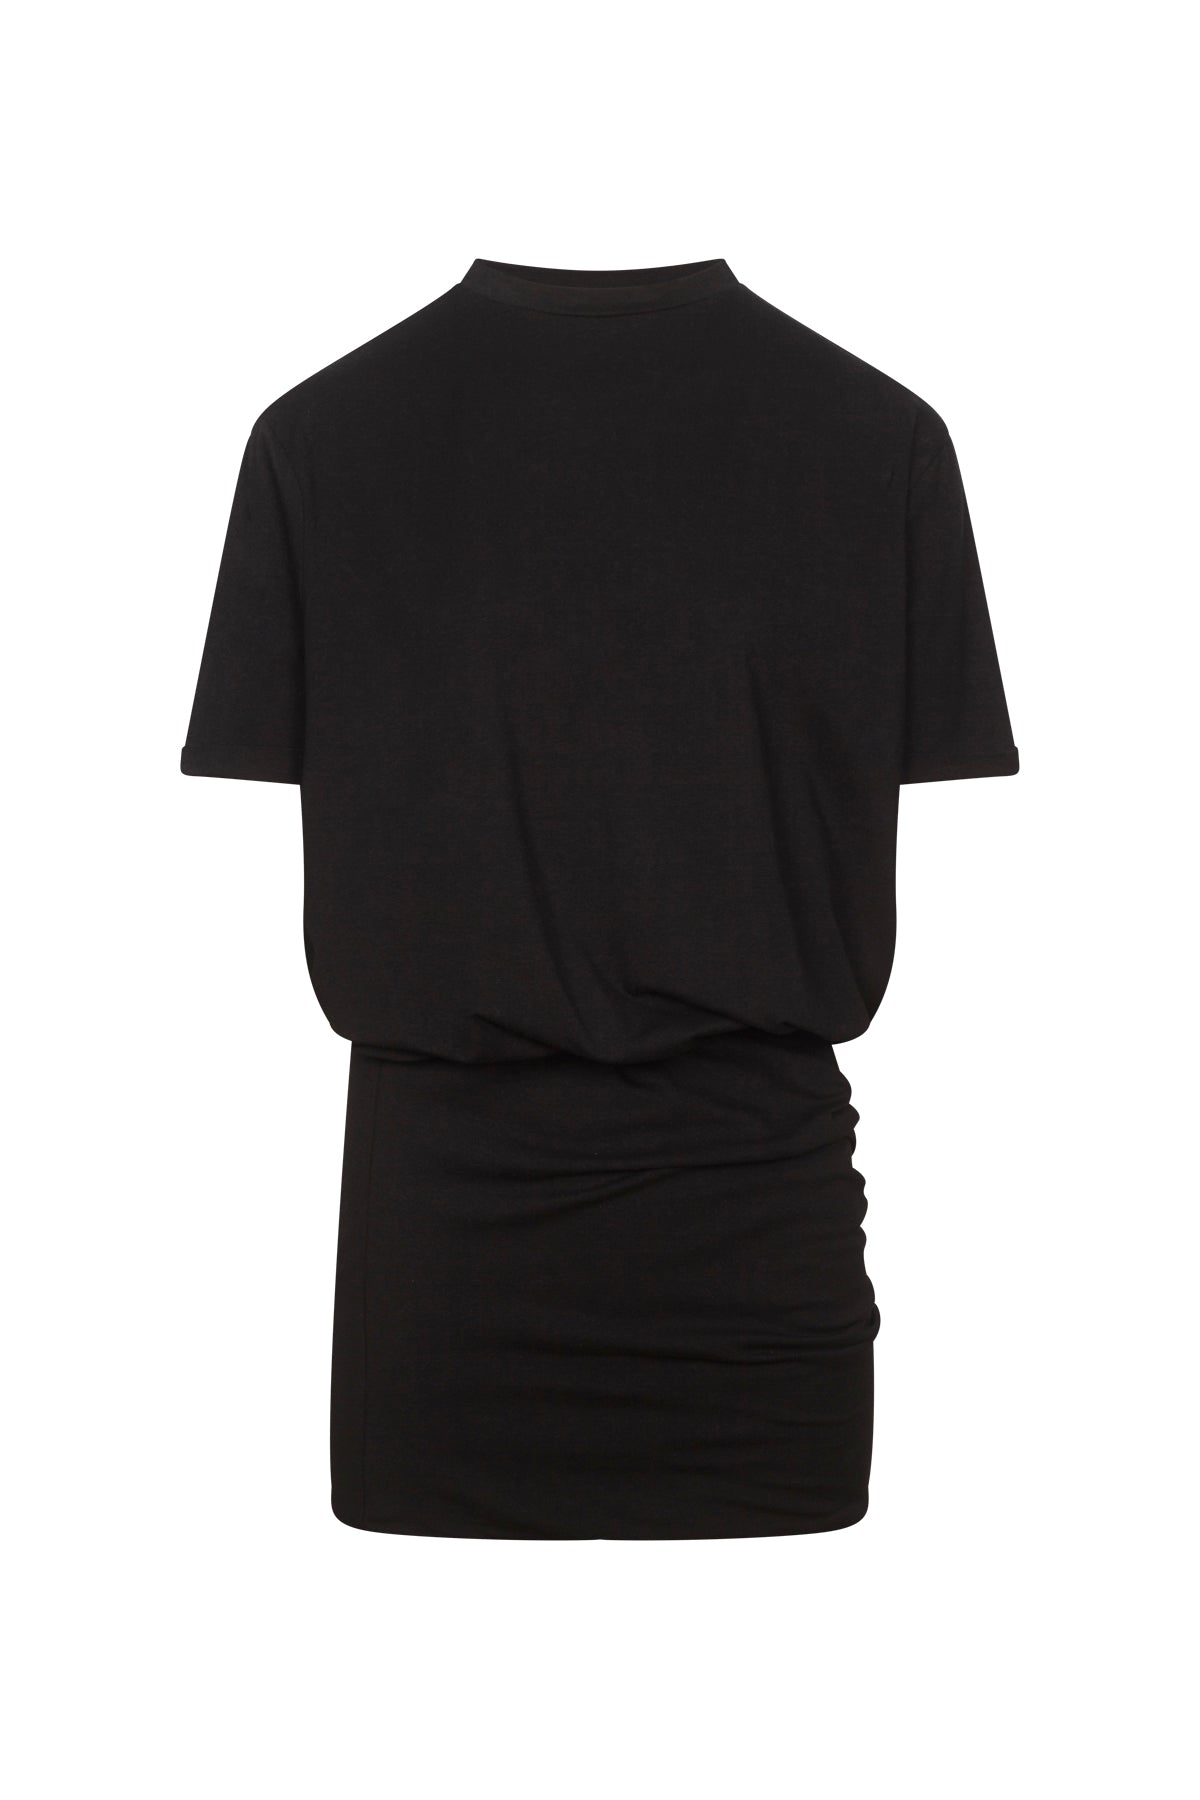 ELISSA Black T-Shirt Dress